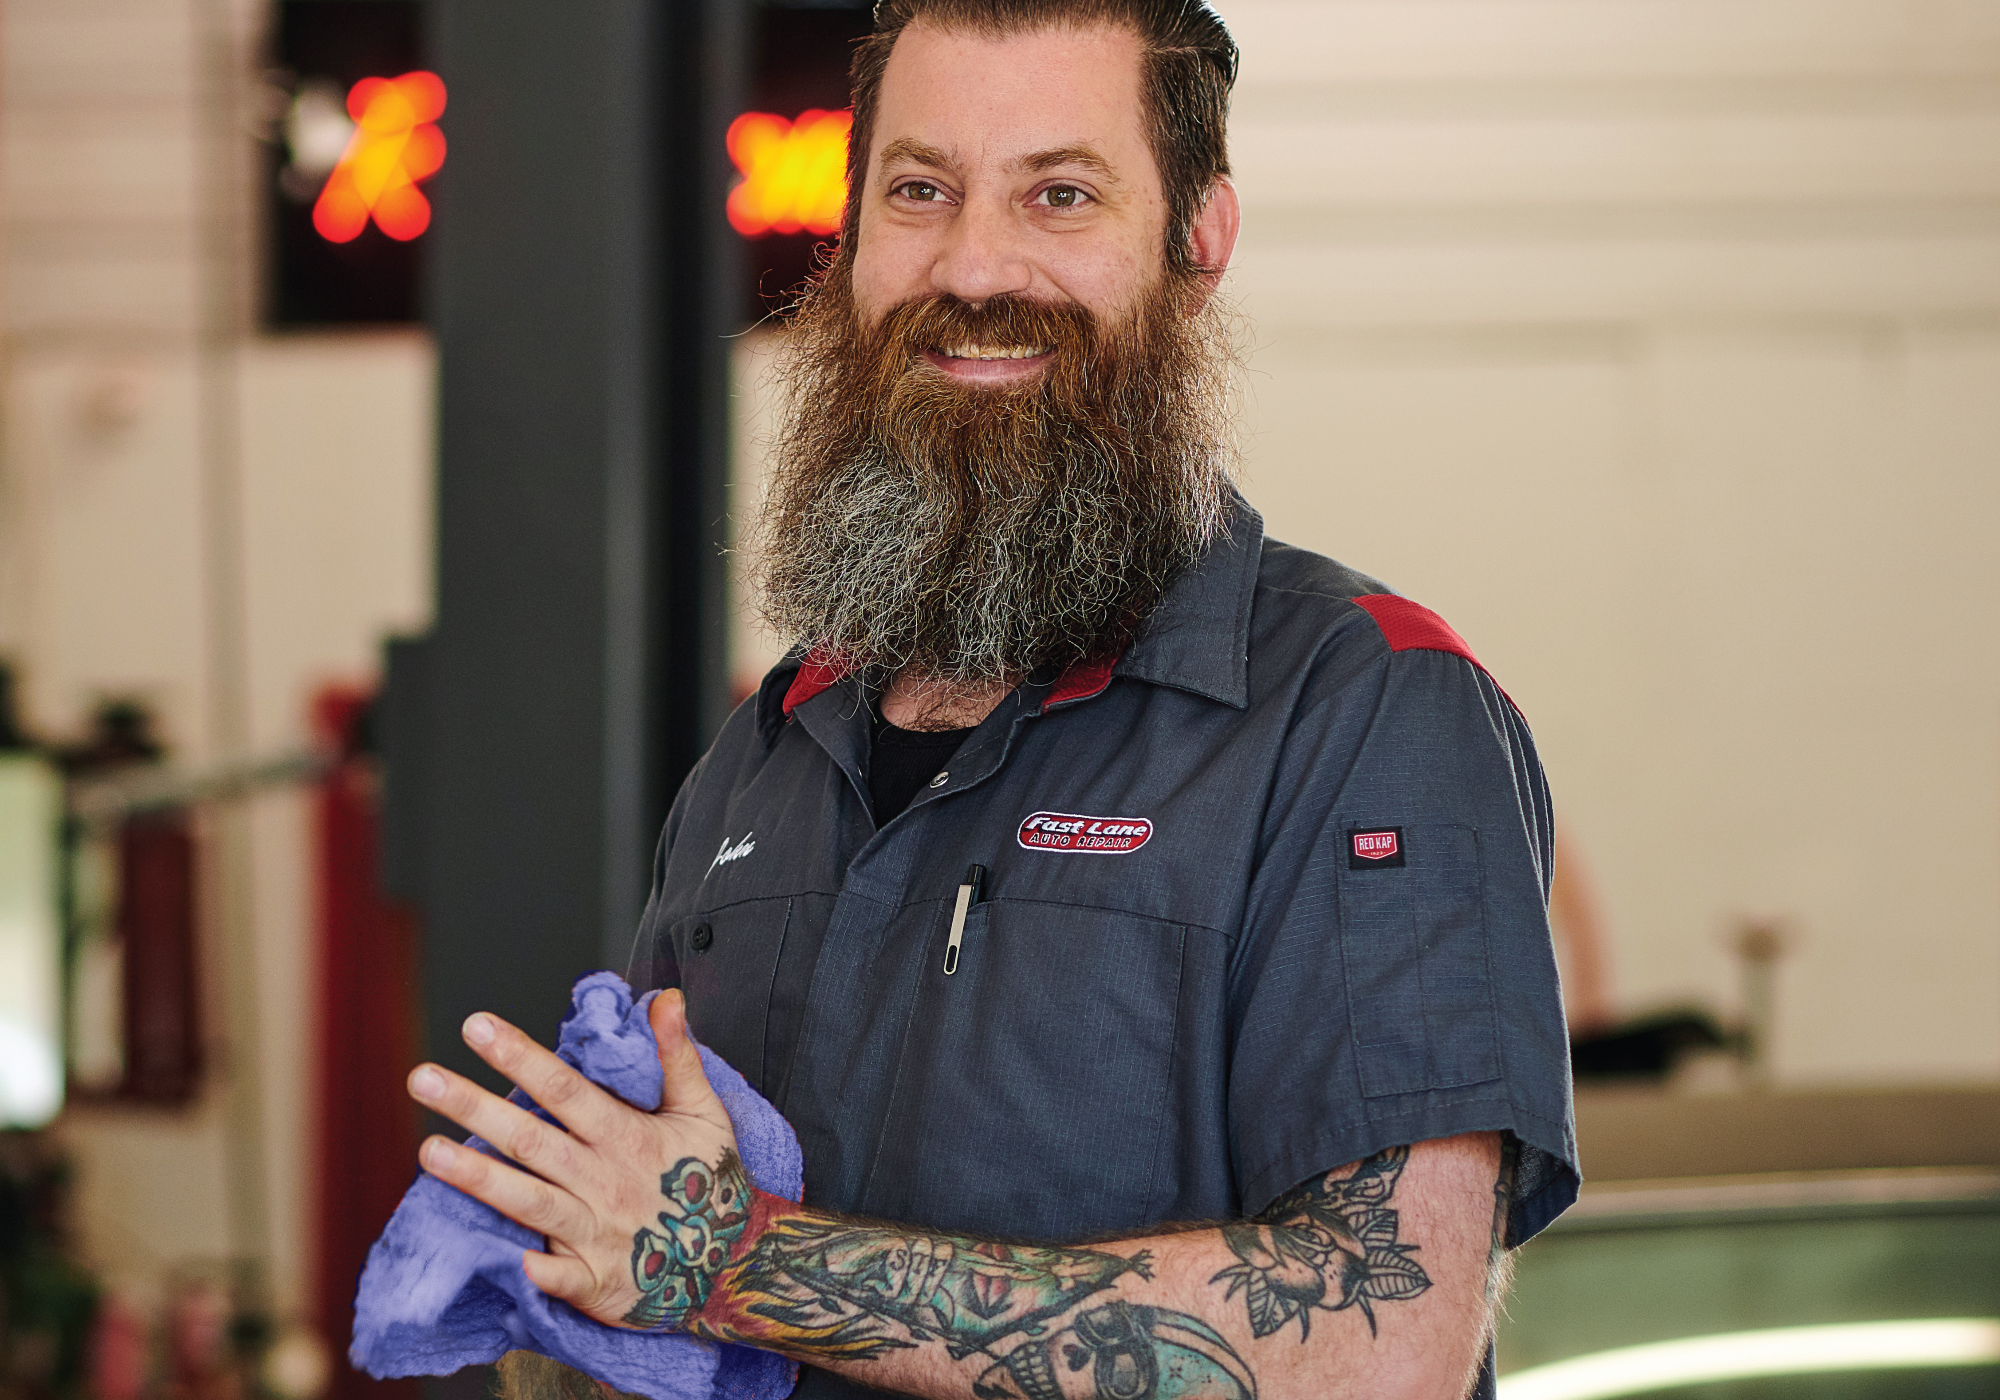 Mechanic using a blue shop towel wearing an automotive uniform